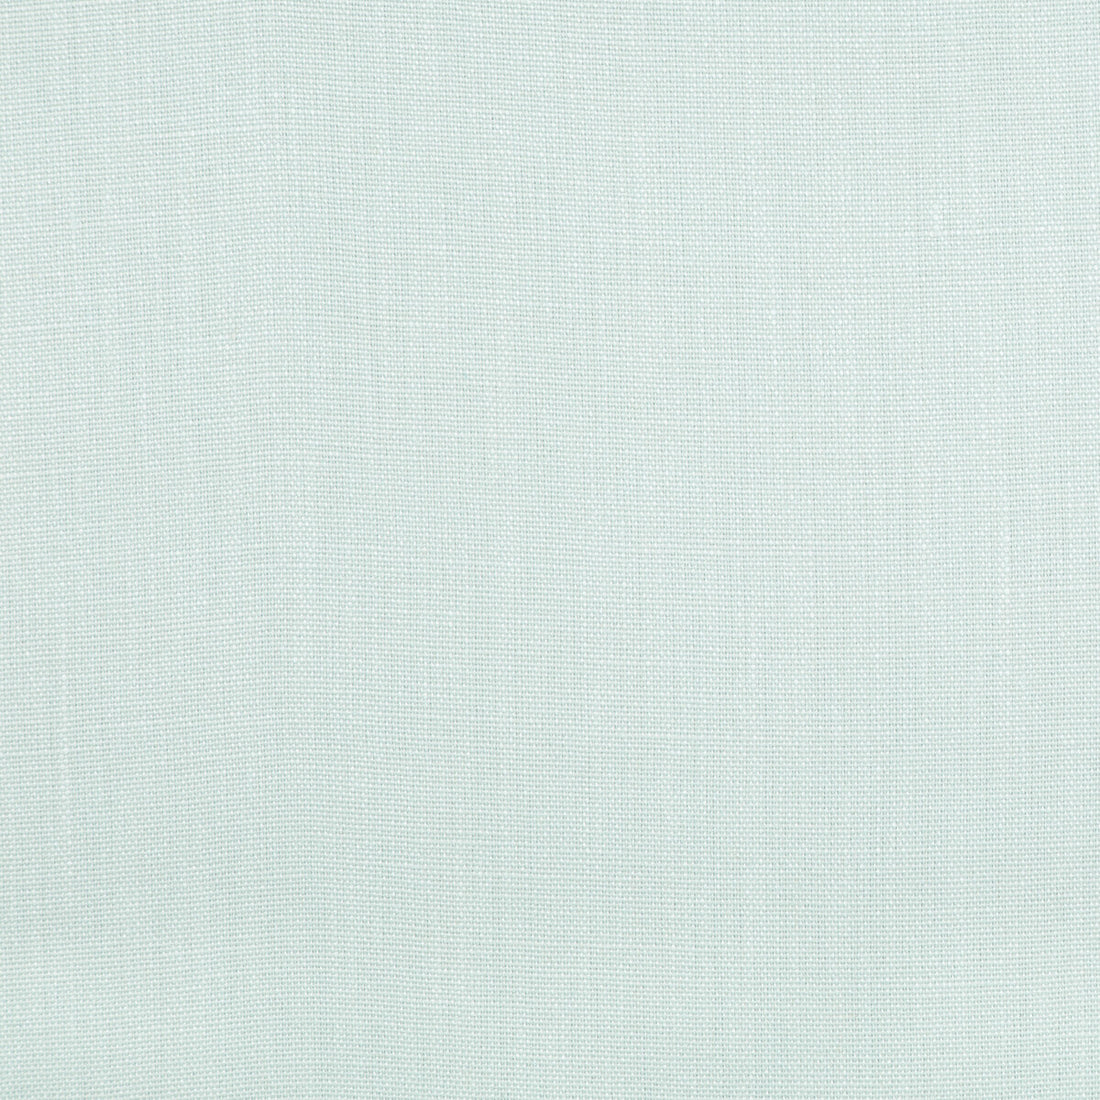 Hampton Linen fabric in sky color - pattern 2012171.1500.0 - by Lee Jofa